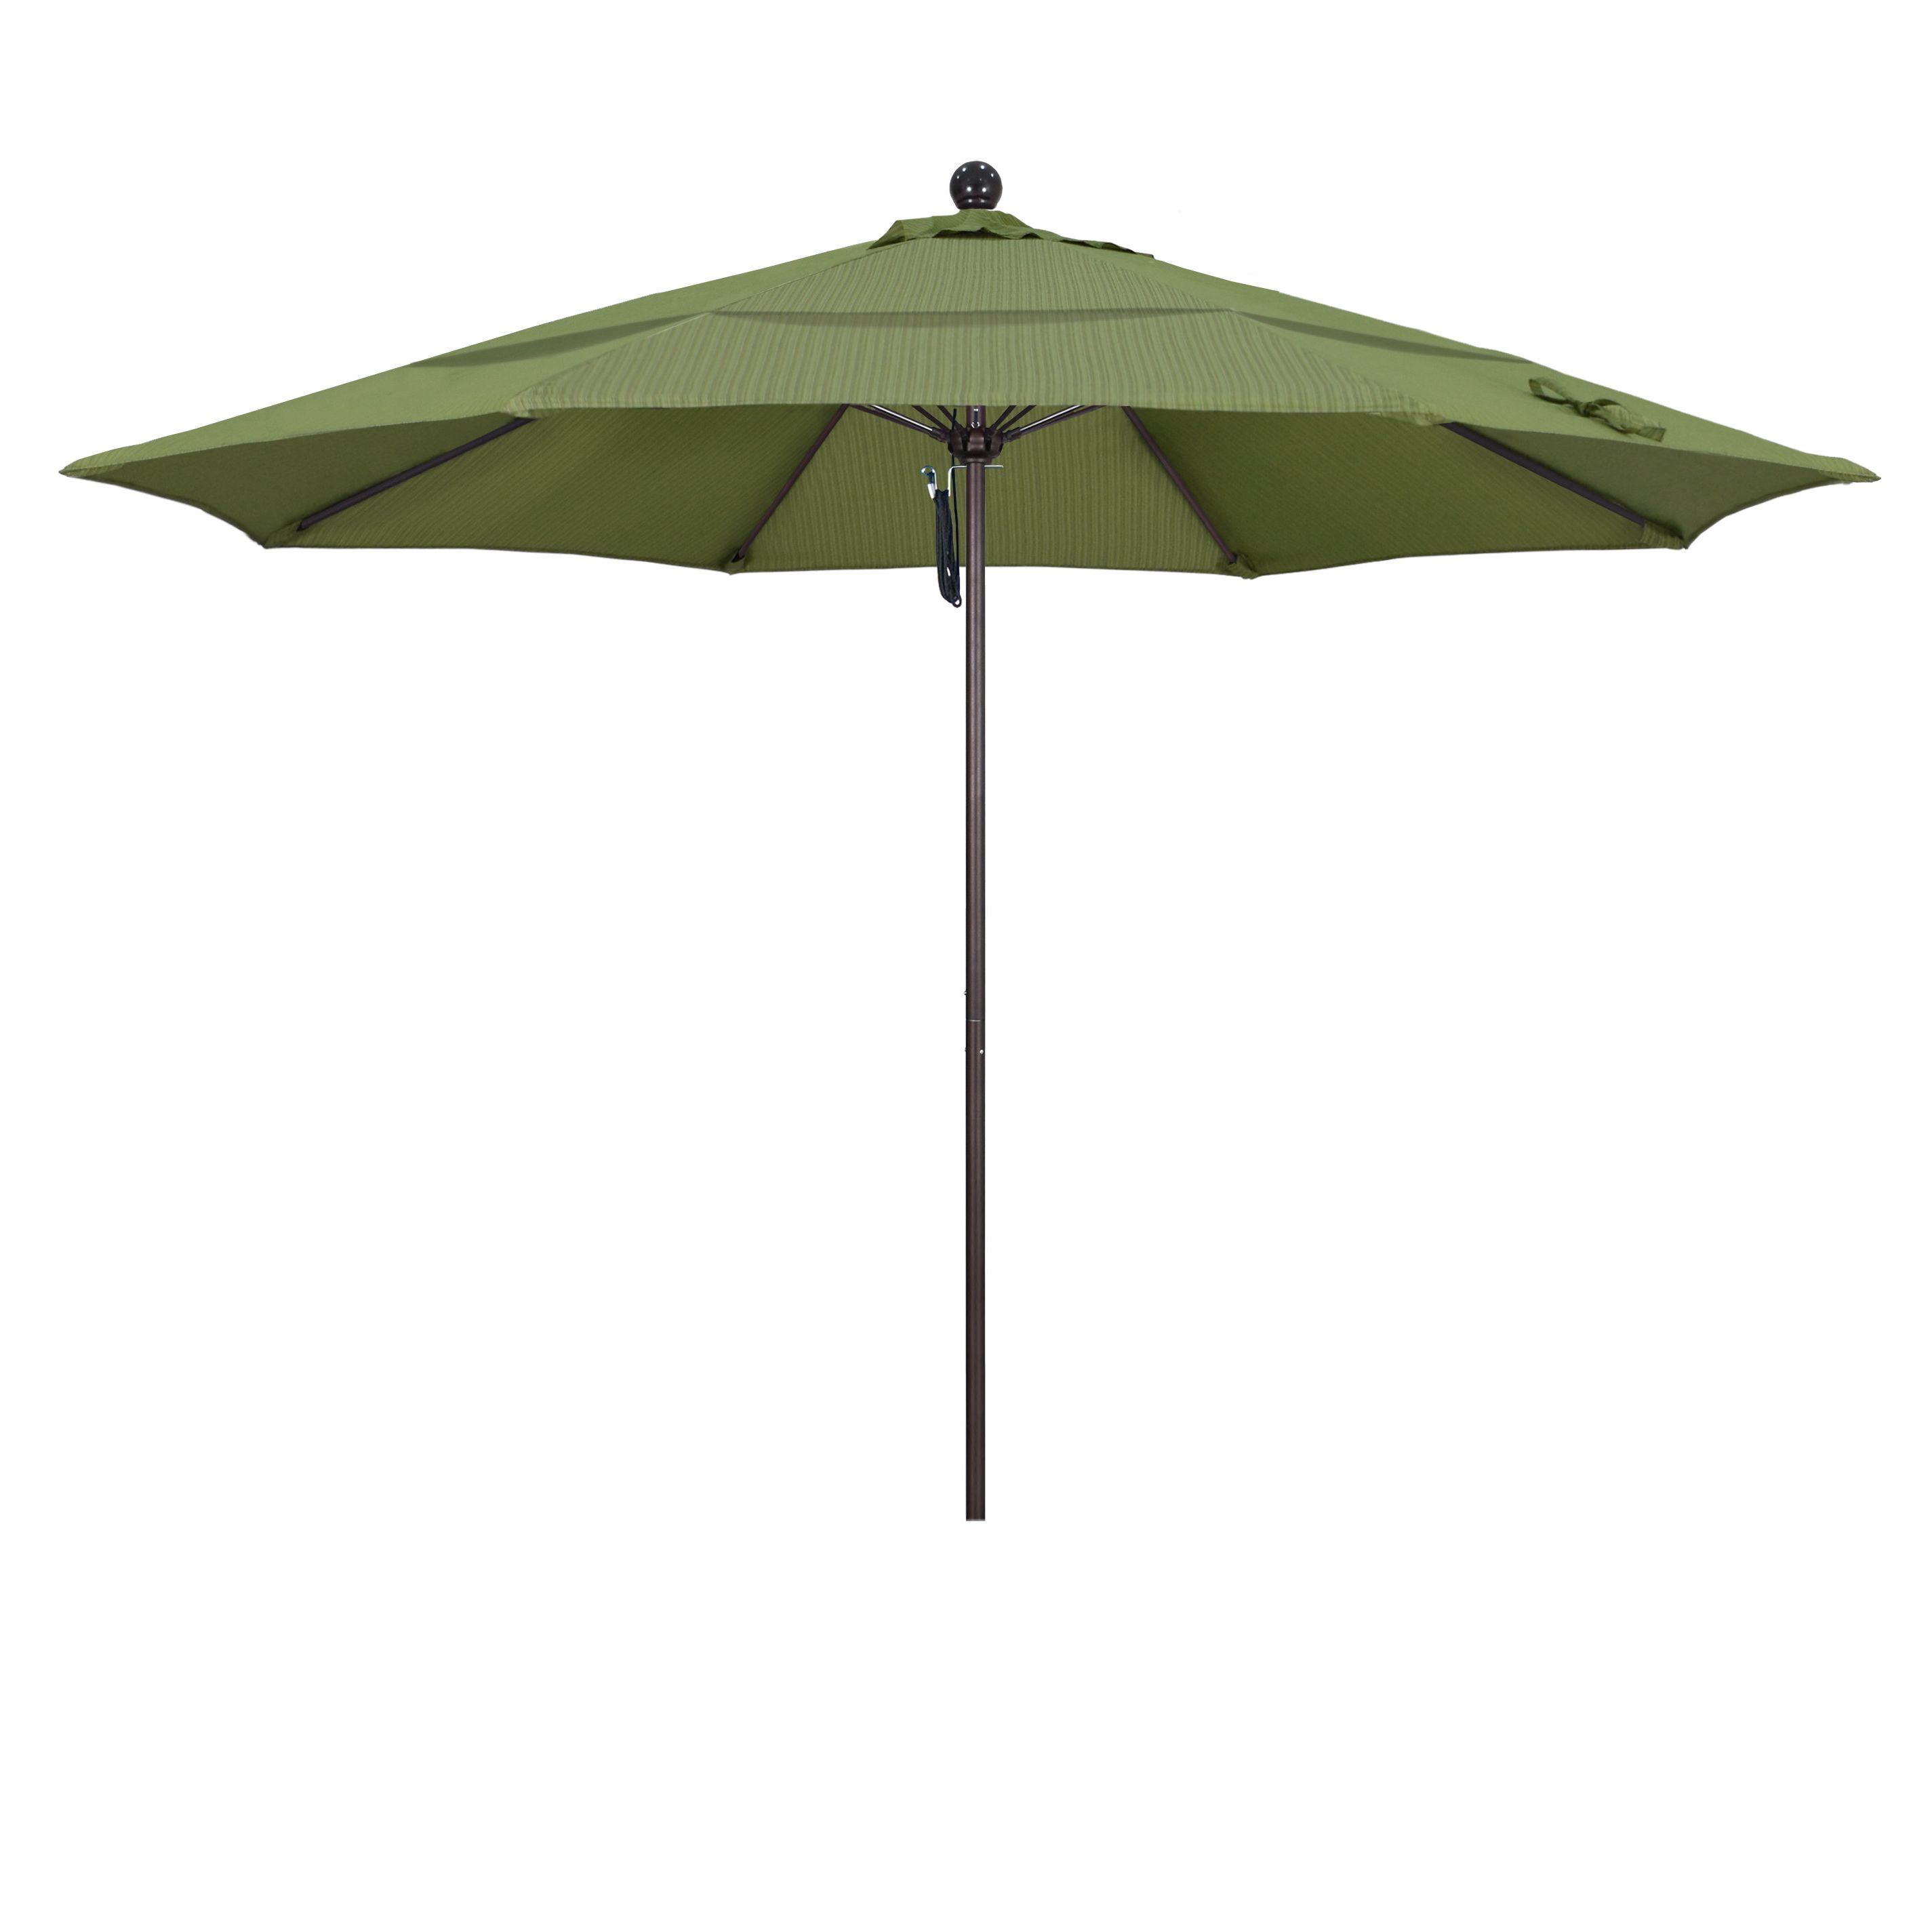 Launceston Market Umbrellas Intended For Well Liked Benson 11' Market Umbrella (View 6 of 20)